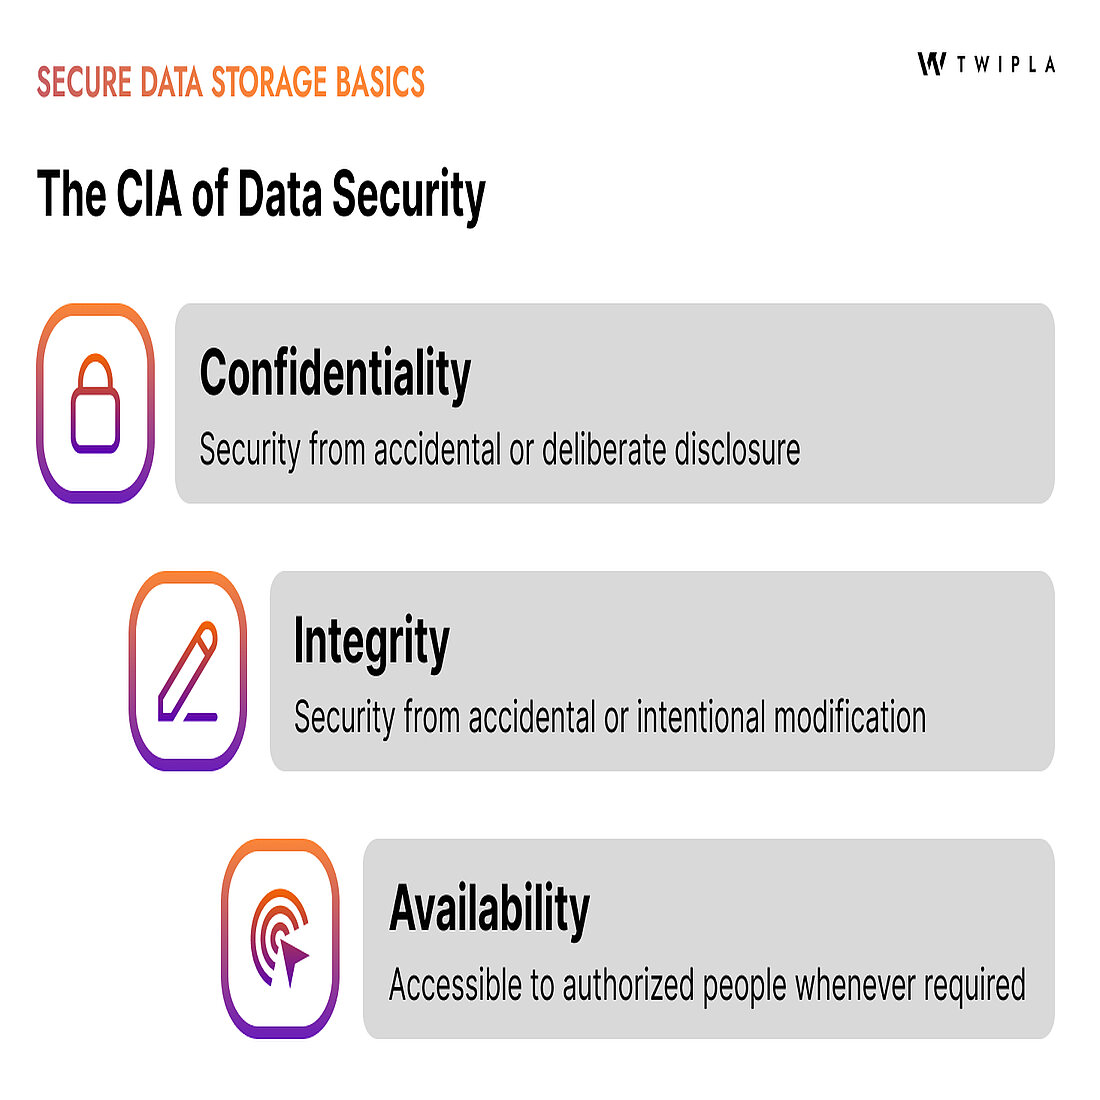 The CIA triad behind secure data storage